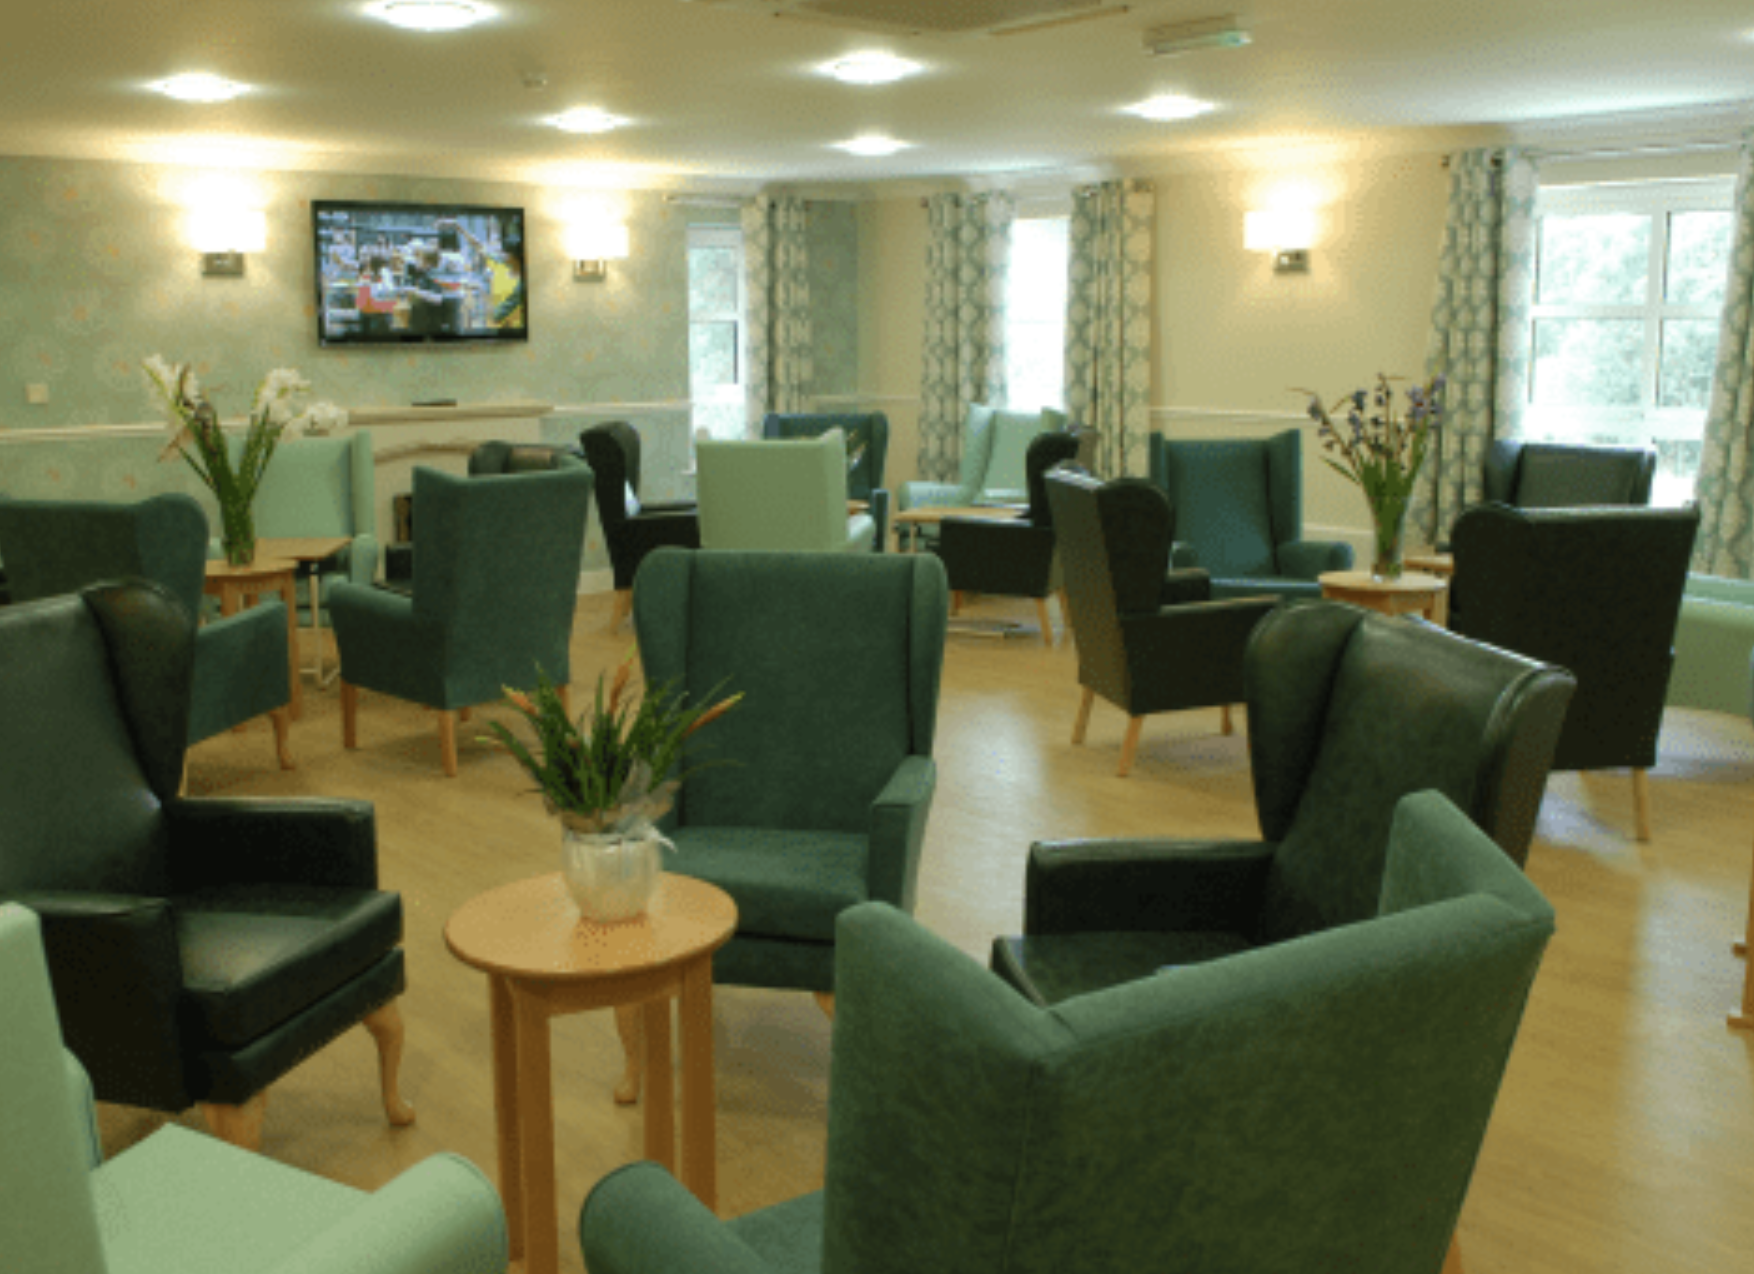 Lounge of Halden Heights care community in Ashford, Kent